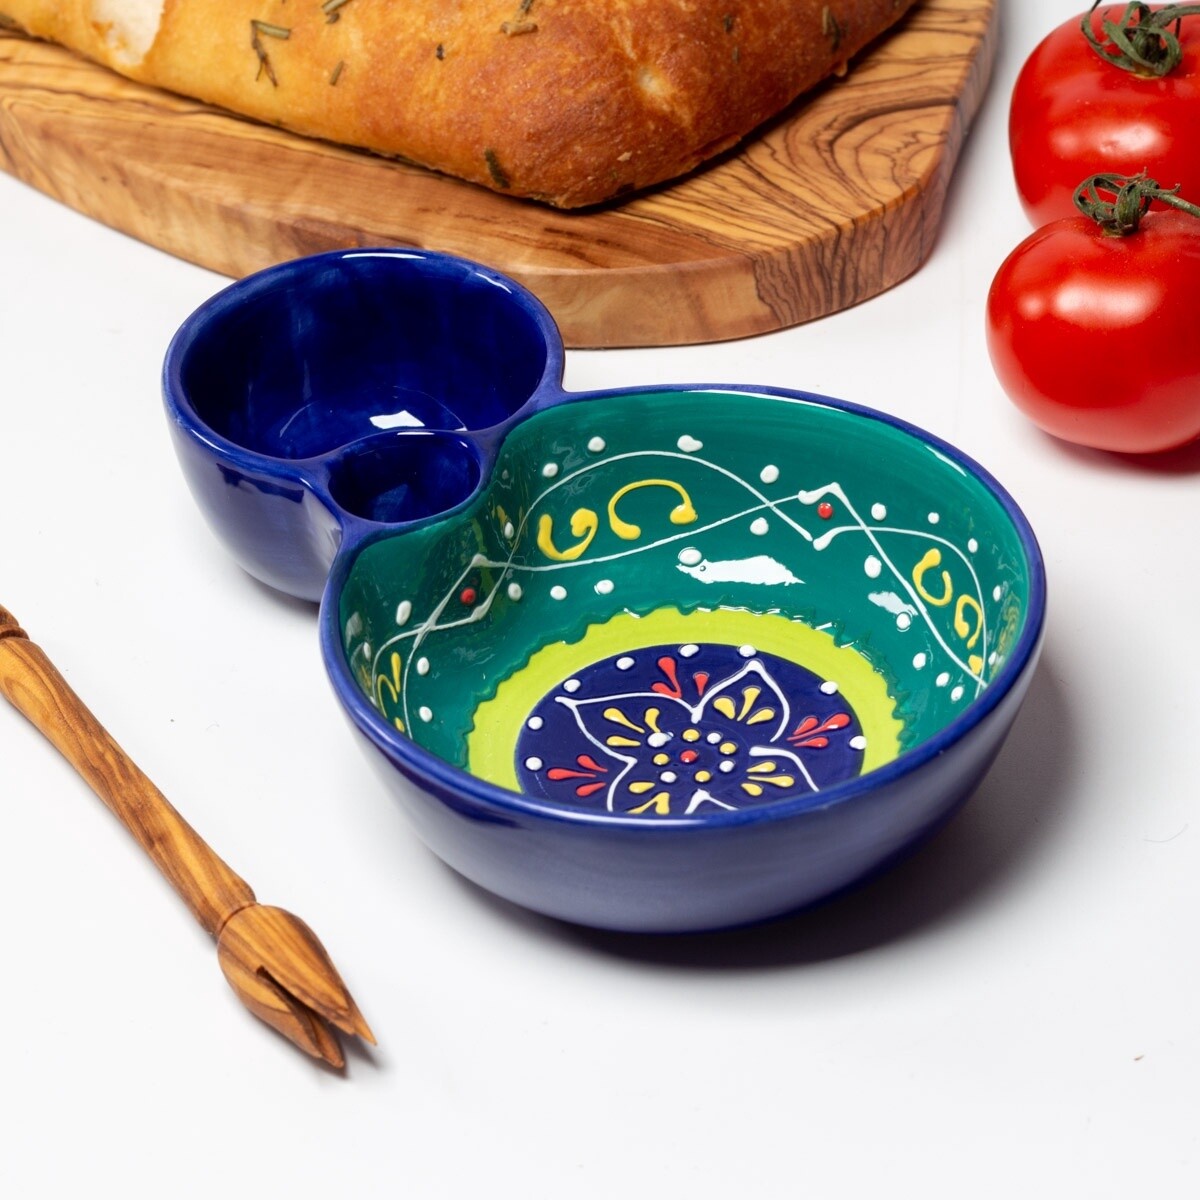 Classic Spanish Hand Painted Ceramic Olive Dish - Blue/green by Verano Ceramics